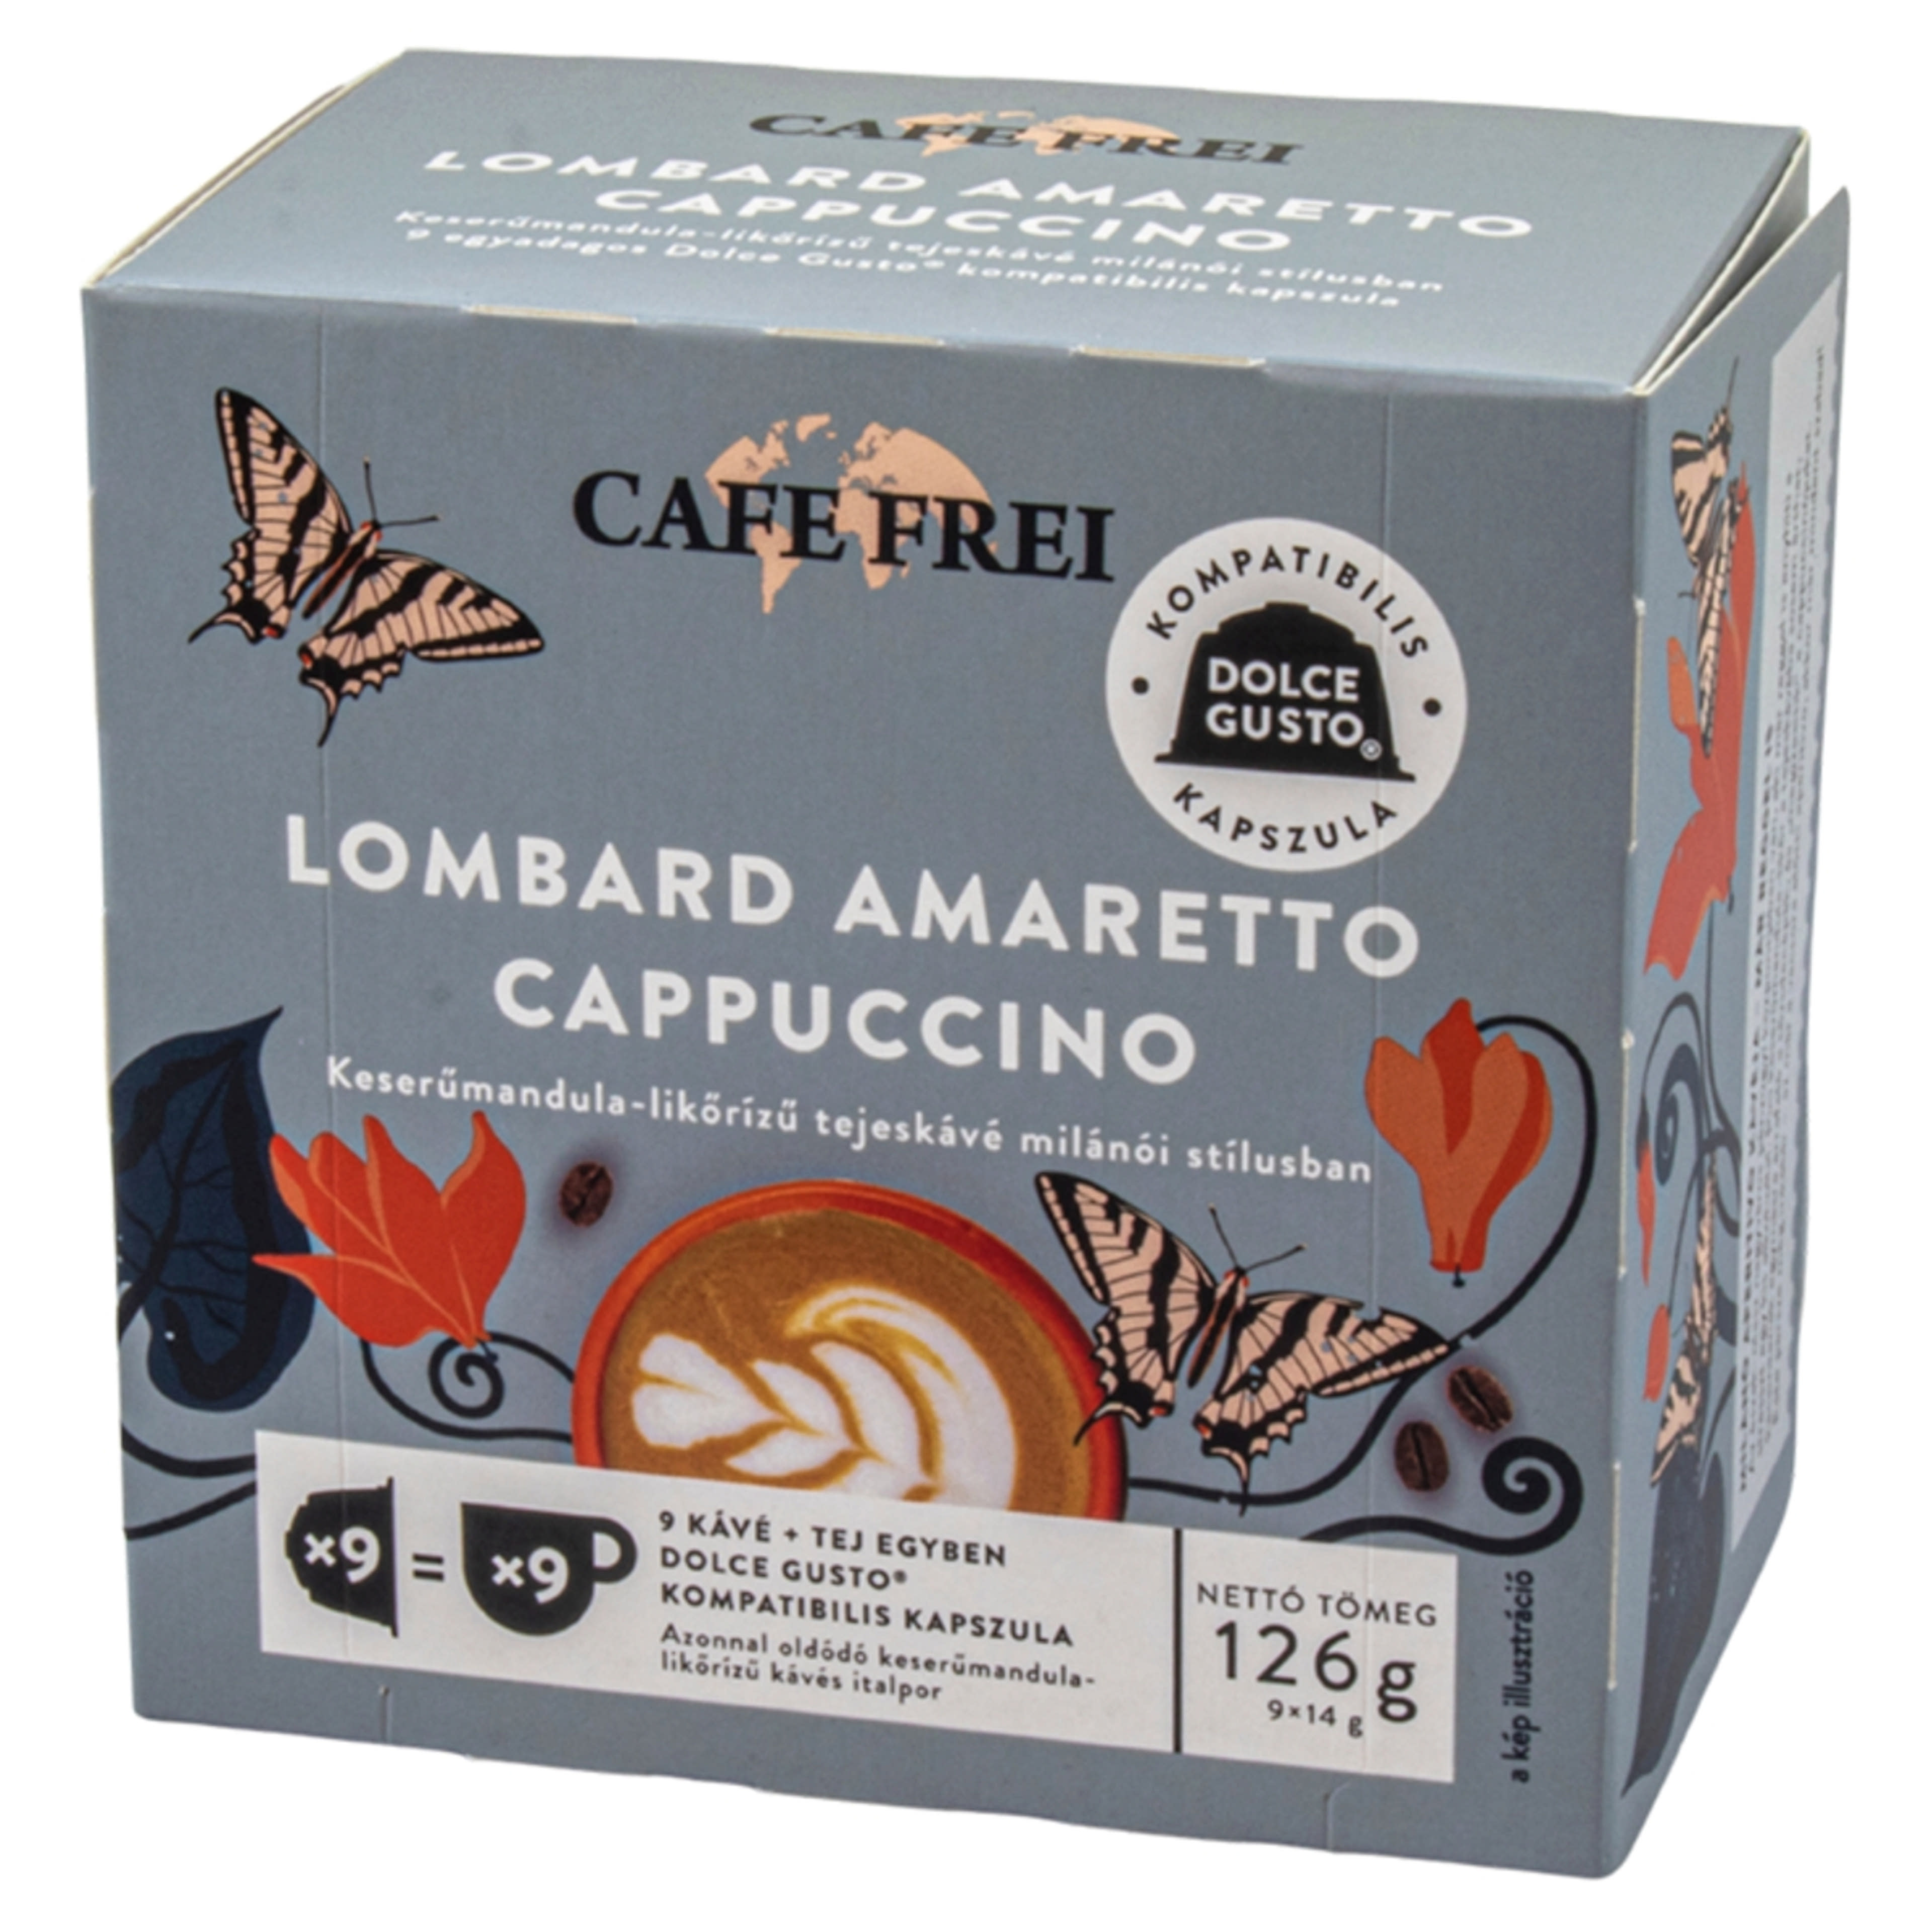 Cafe Frei Lombard Amaretto Cappuccino keserűmandula-likőrízű kávékapszula - 9 db